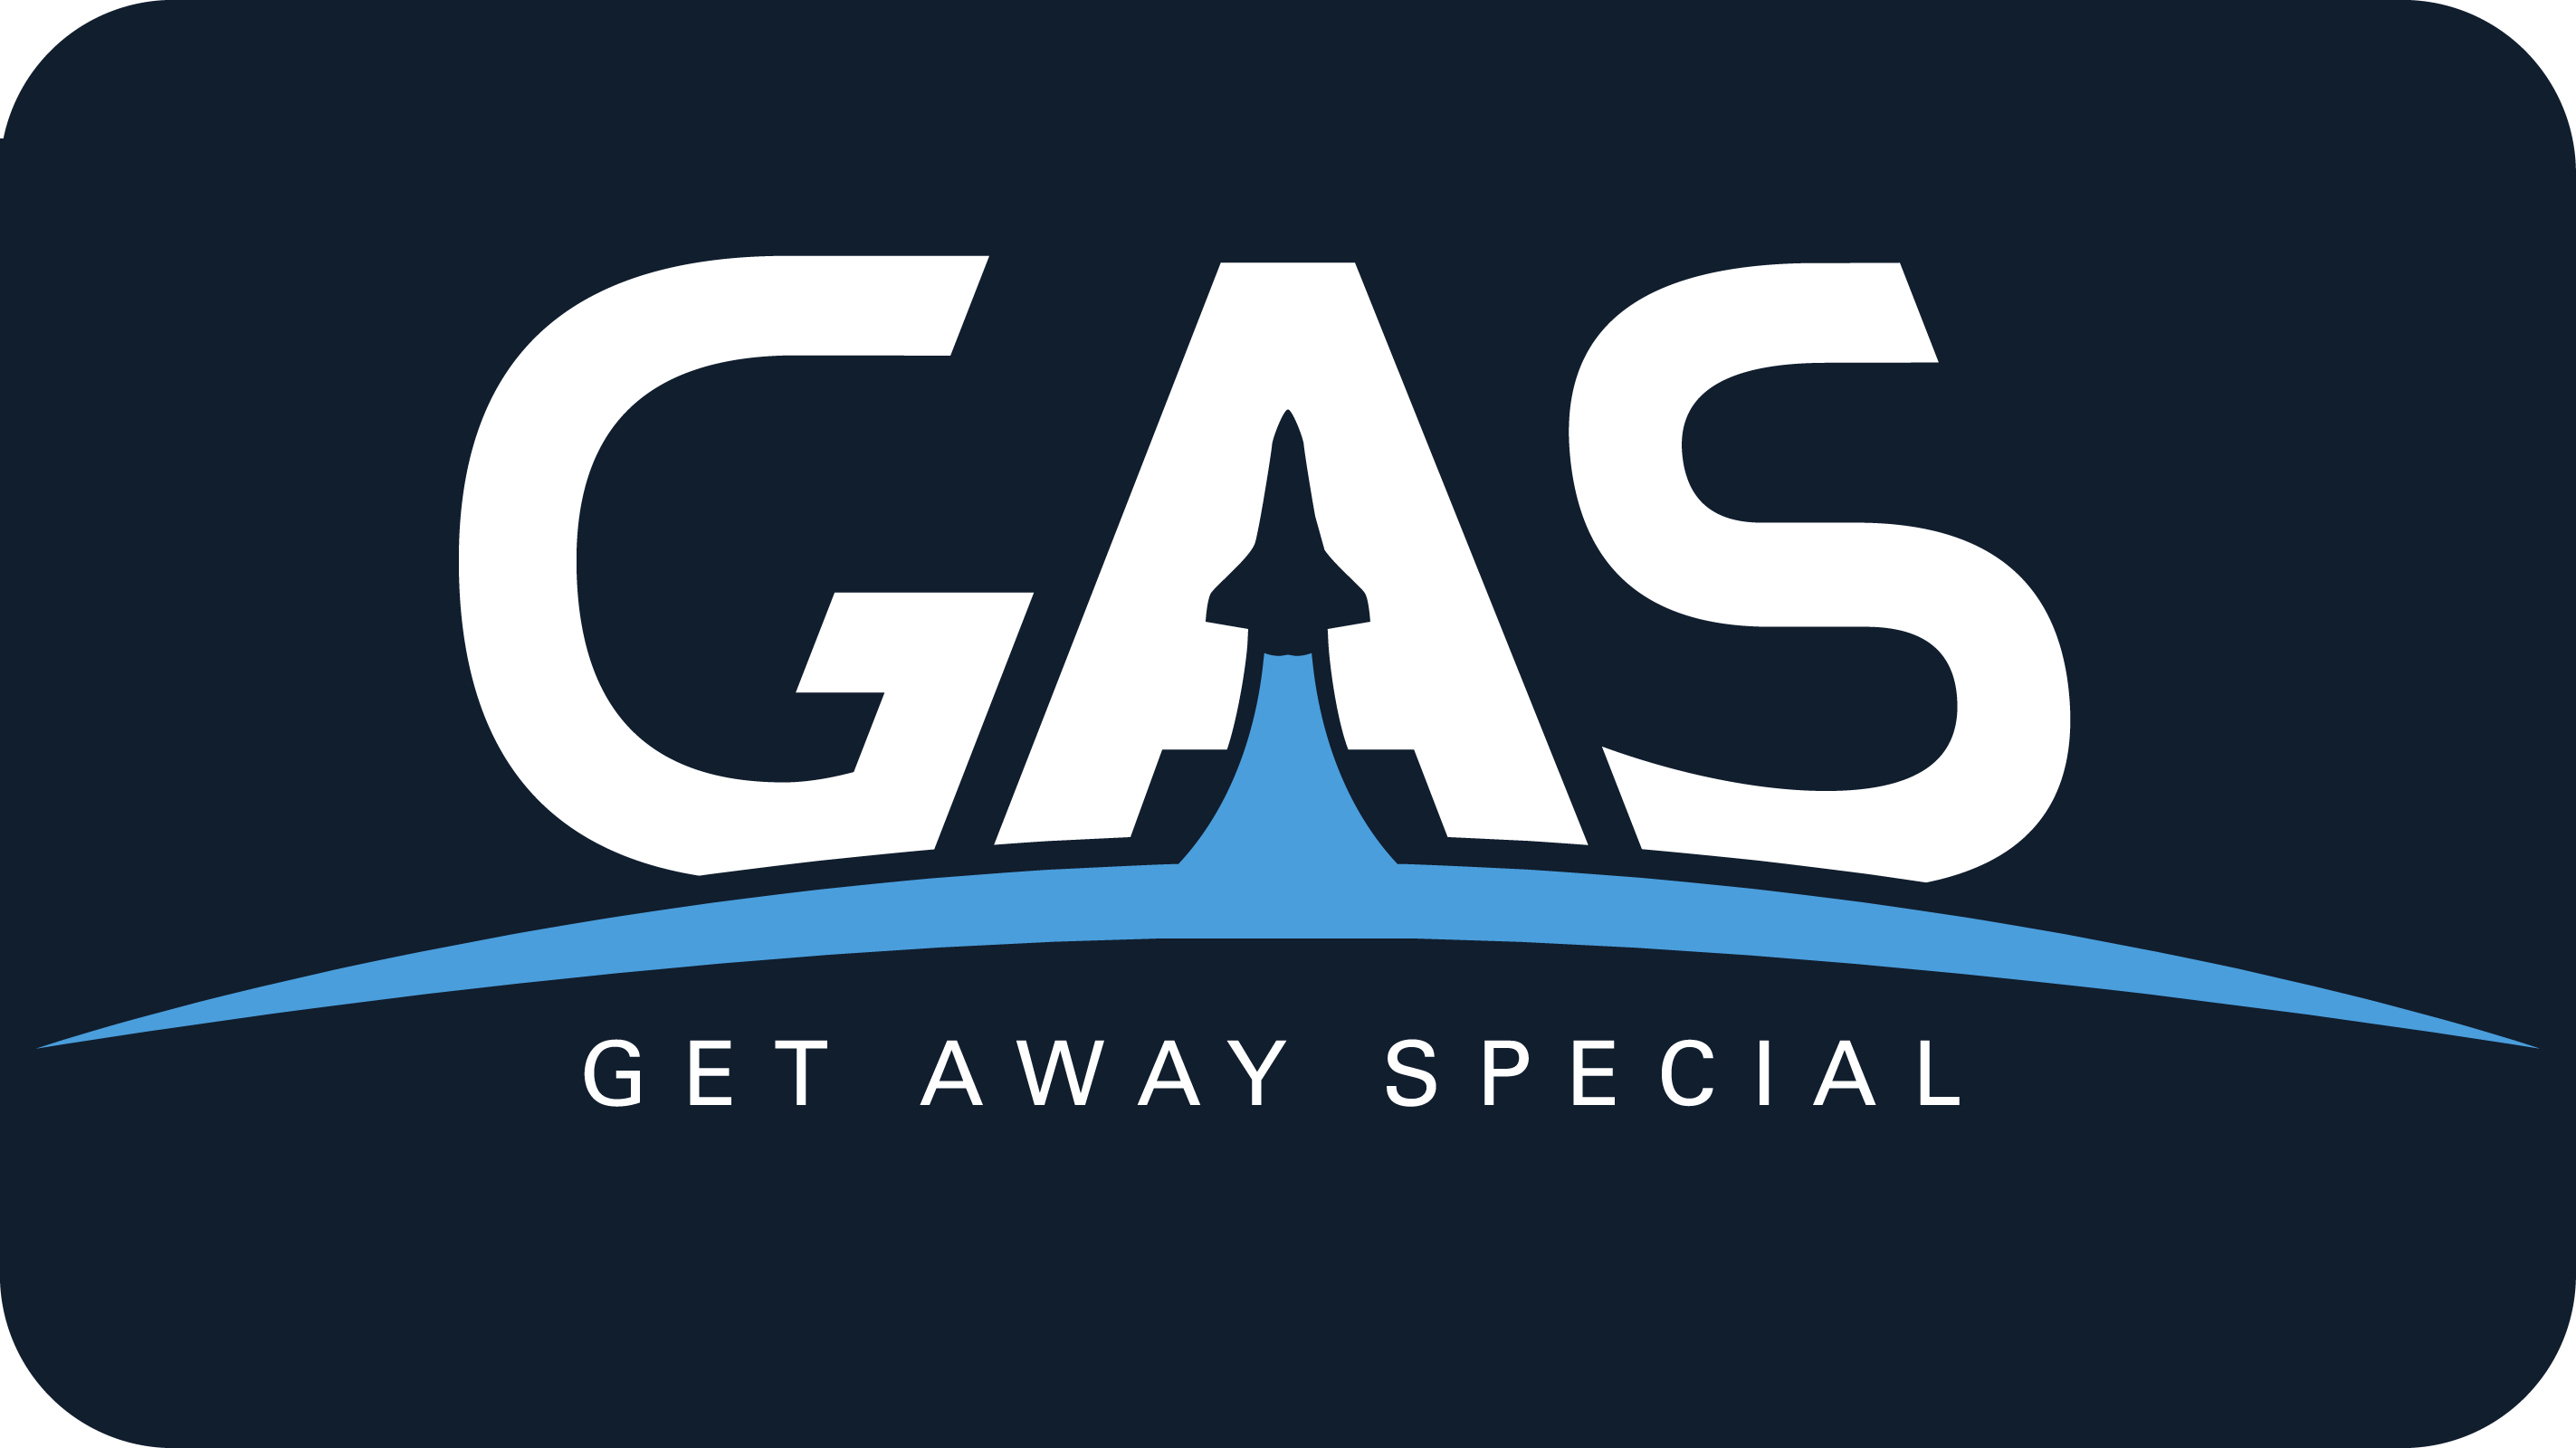 Get Away Special logo